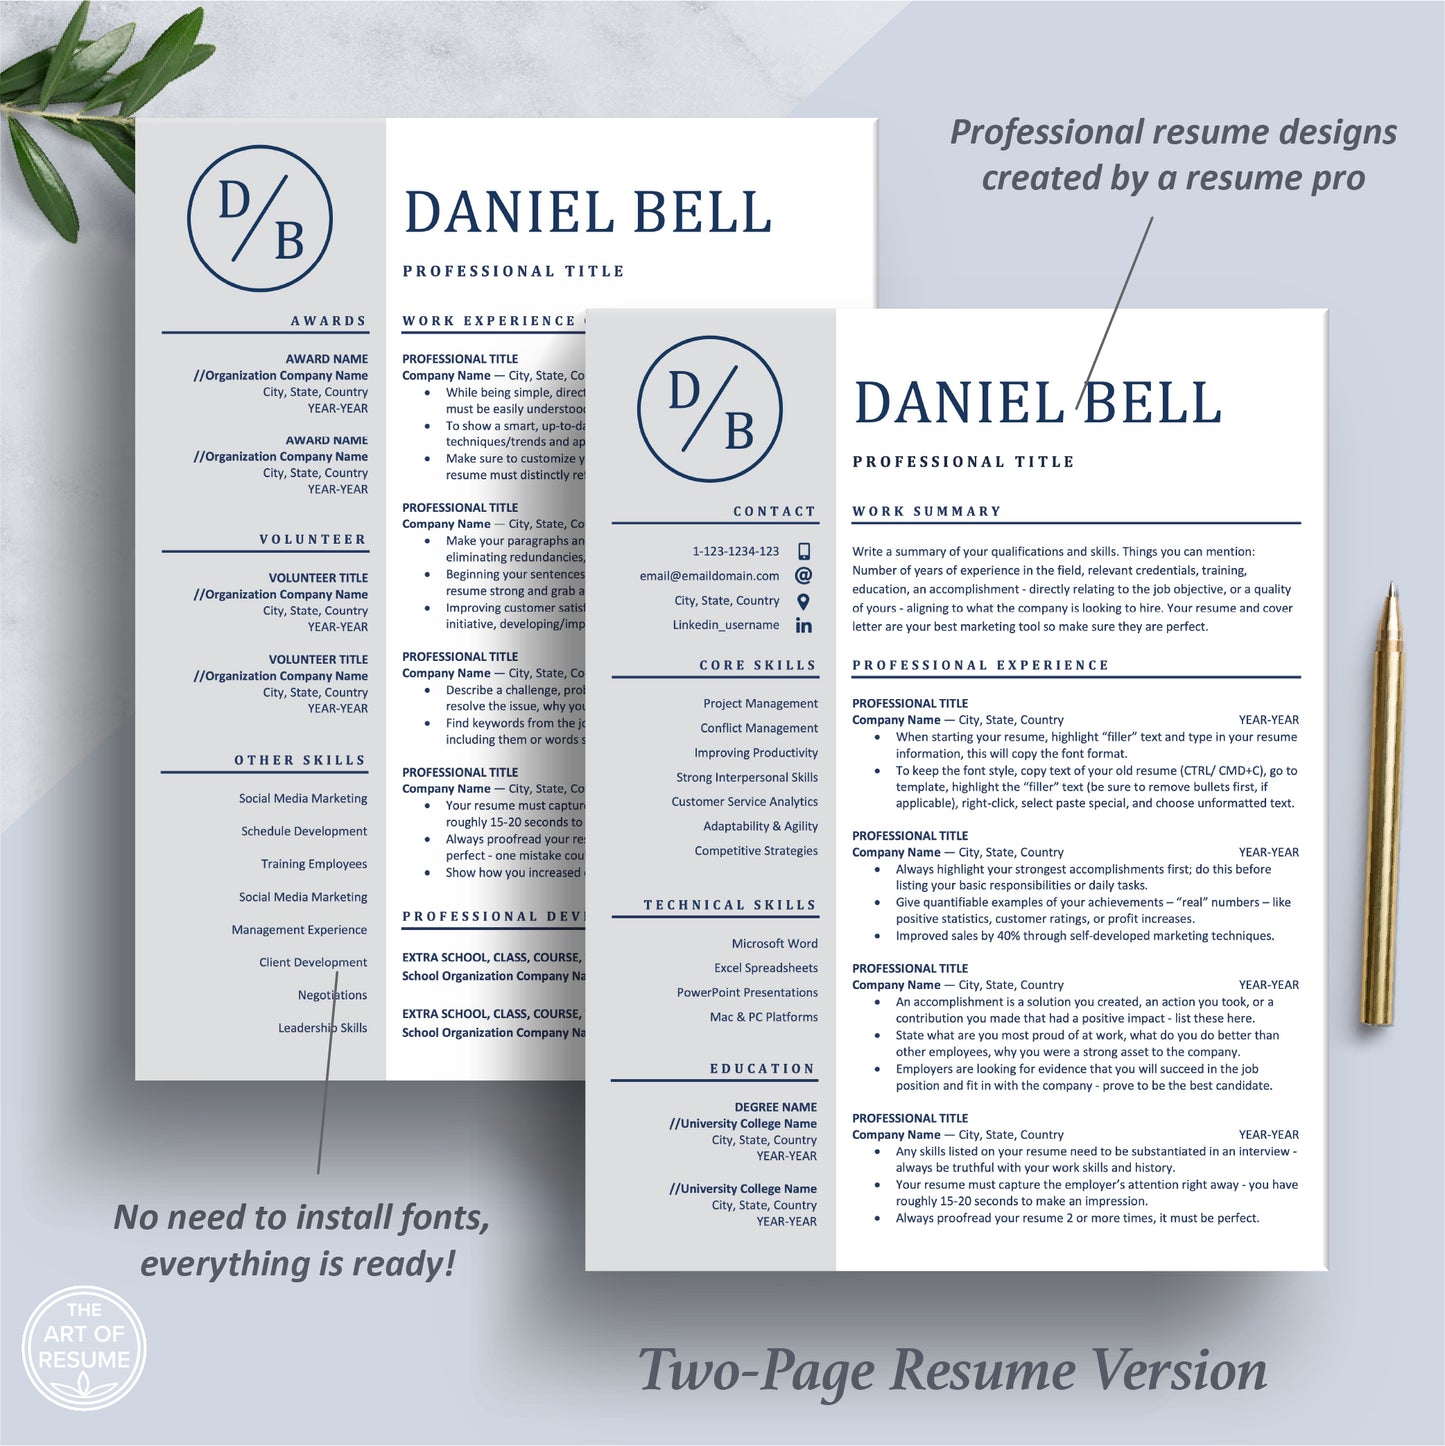 Executive Resume Design | Professional Resume CV - The Art of Resume